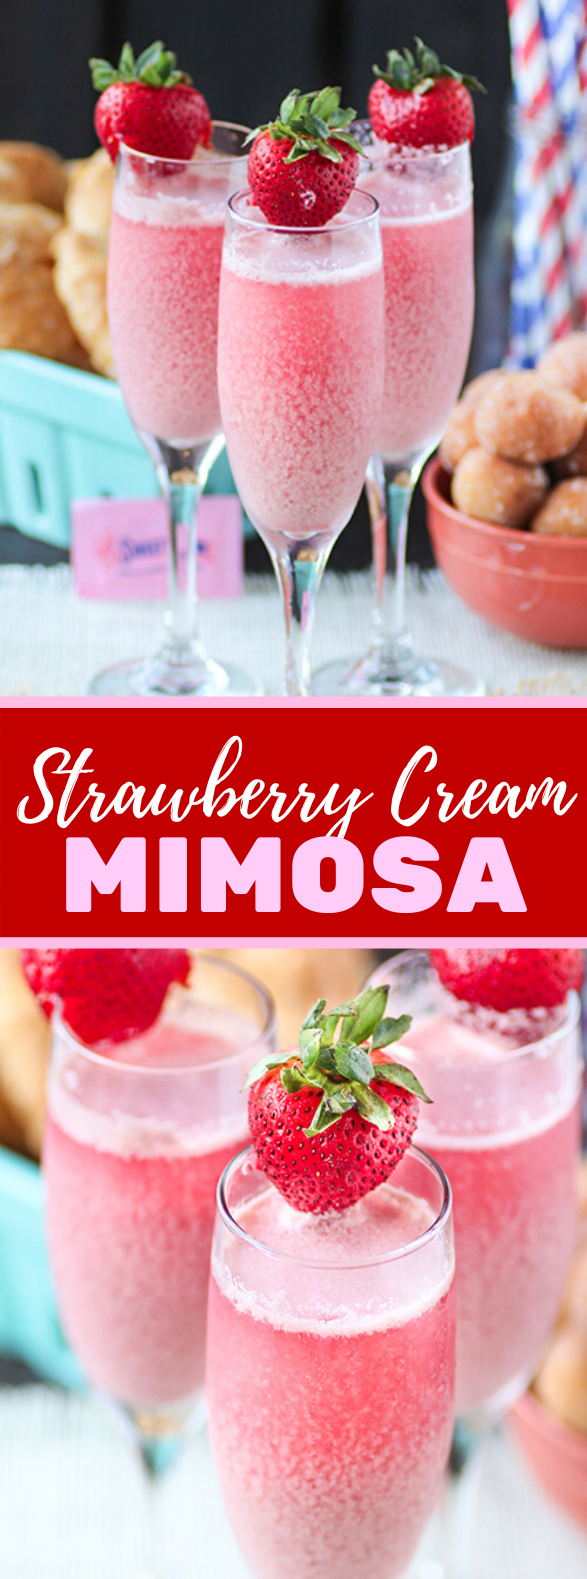 Strawberry Cream Mimosa #drinks #holiday